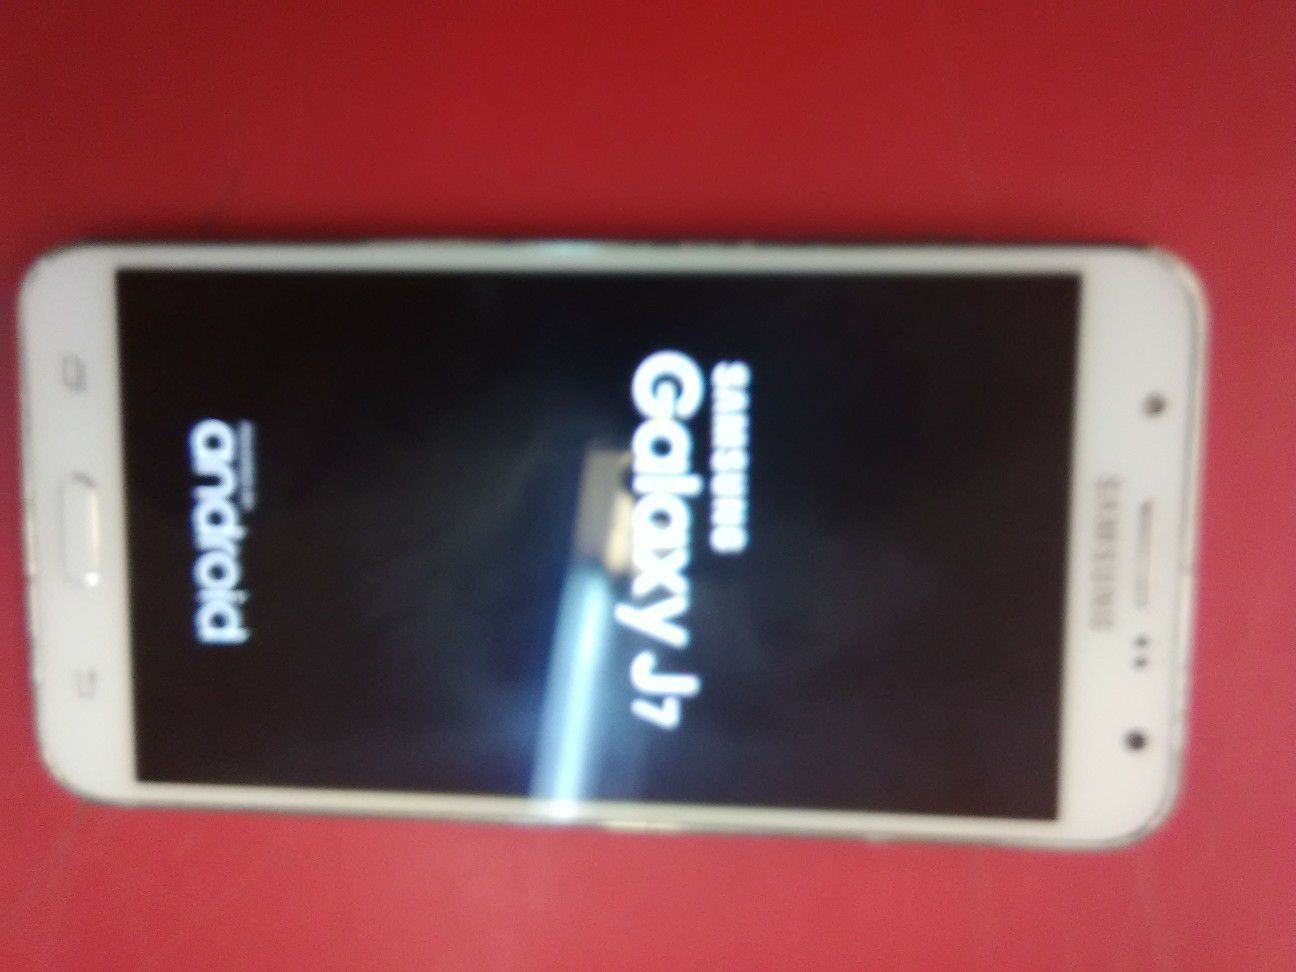 Samsung Galaxy J7 smart phone